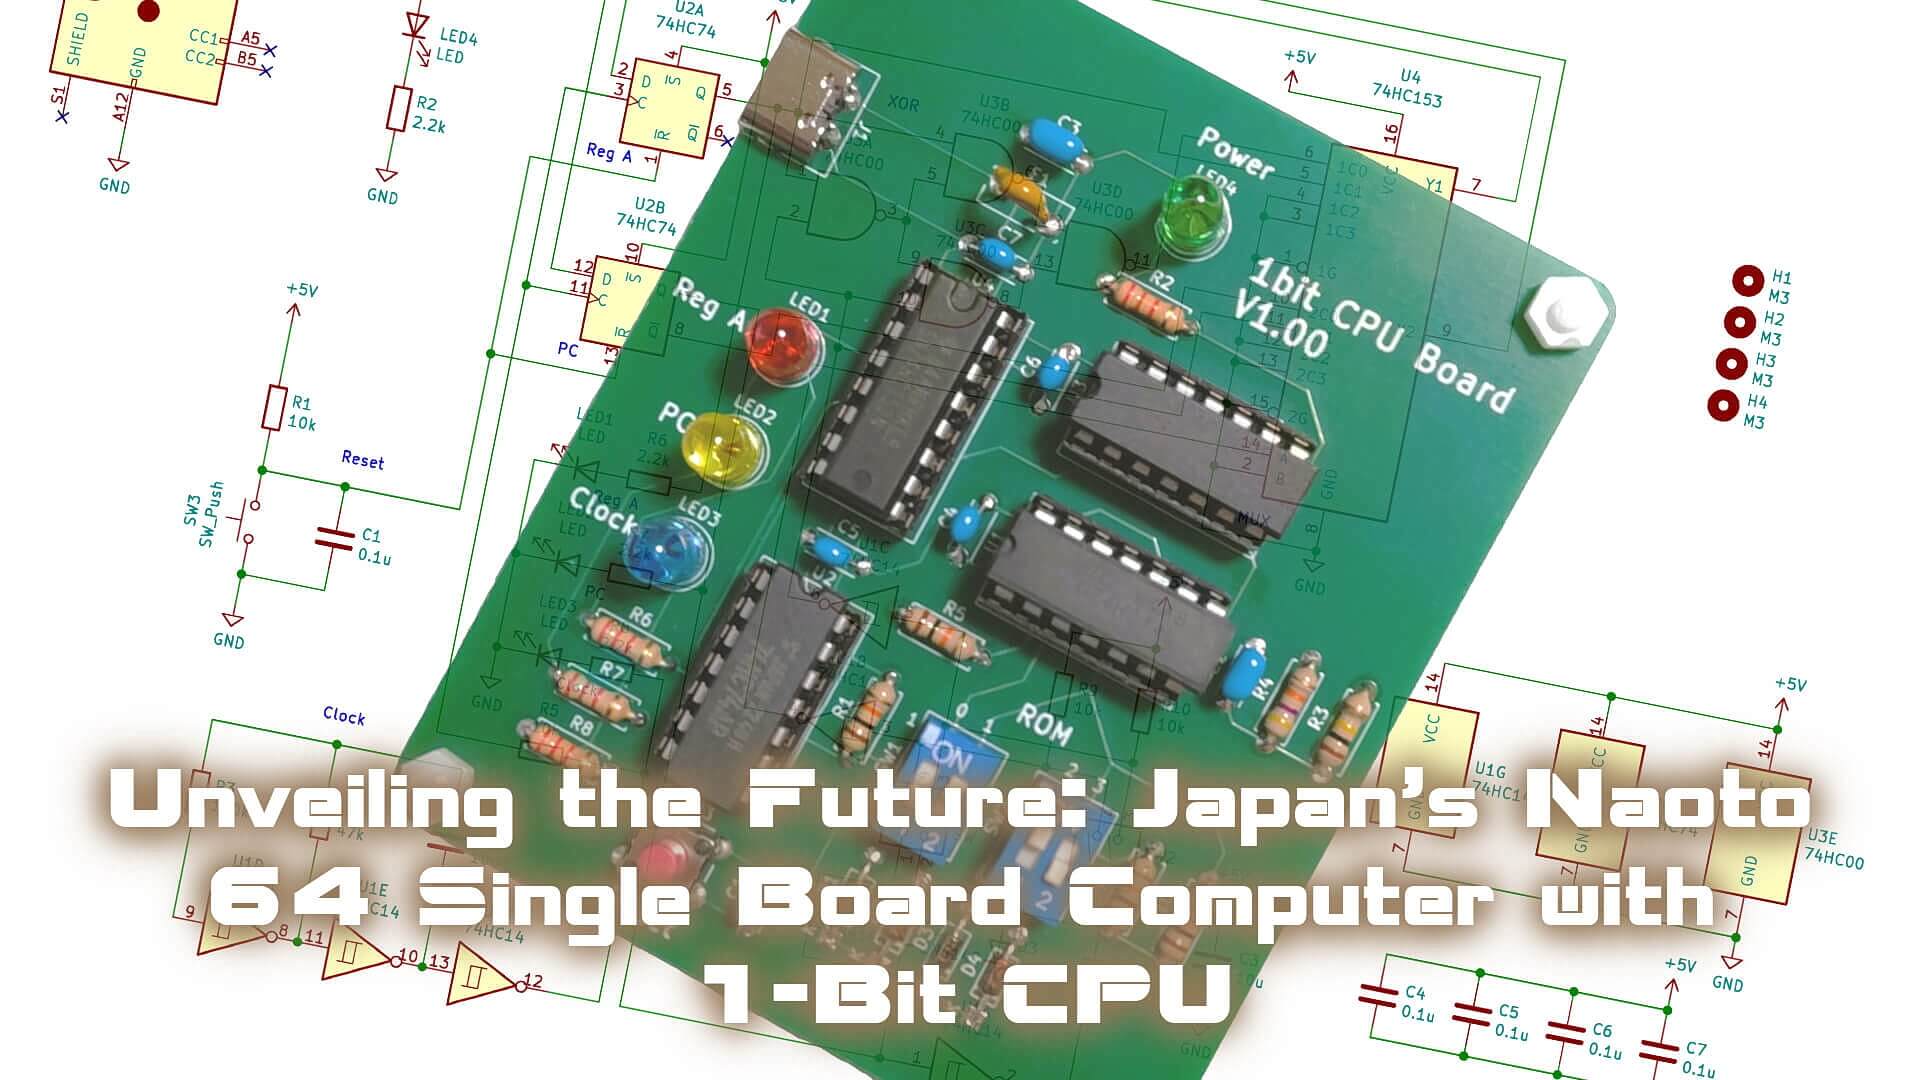 Japan’s Naoto 64 Single Board Computer with 1-Bit CPU